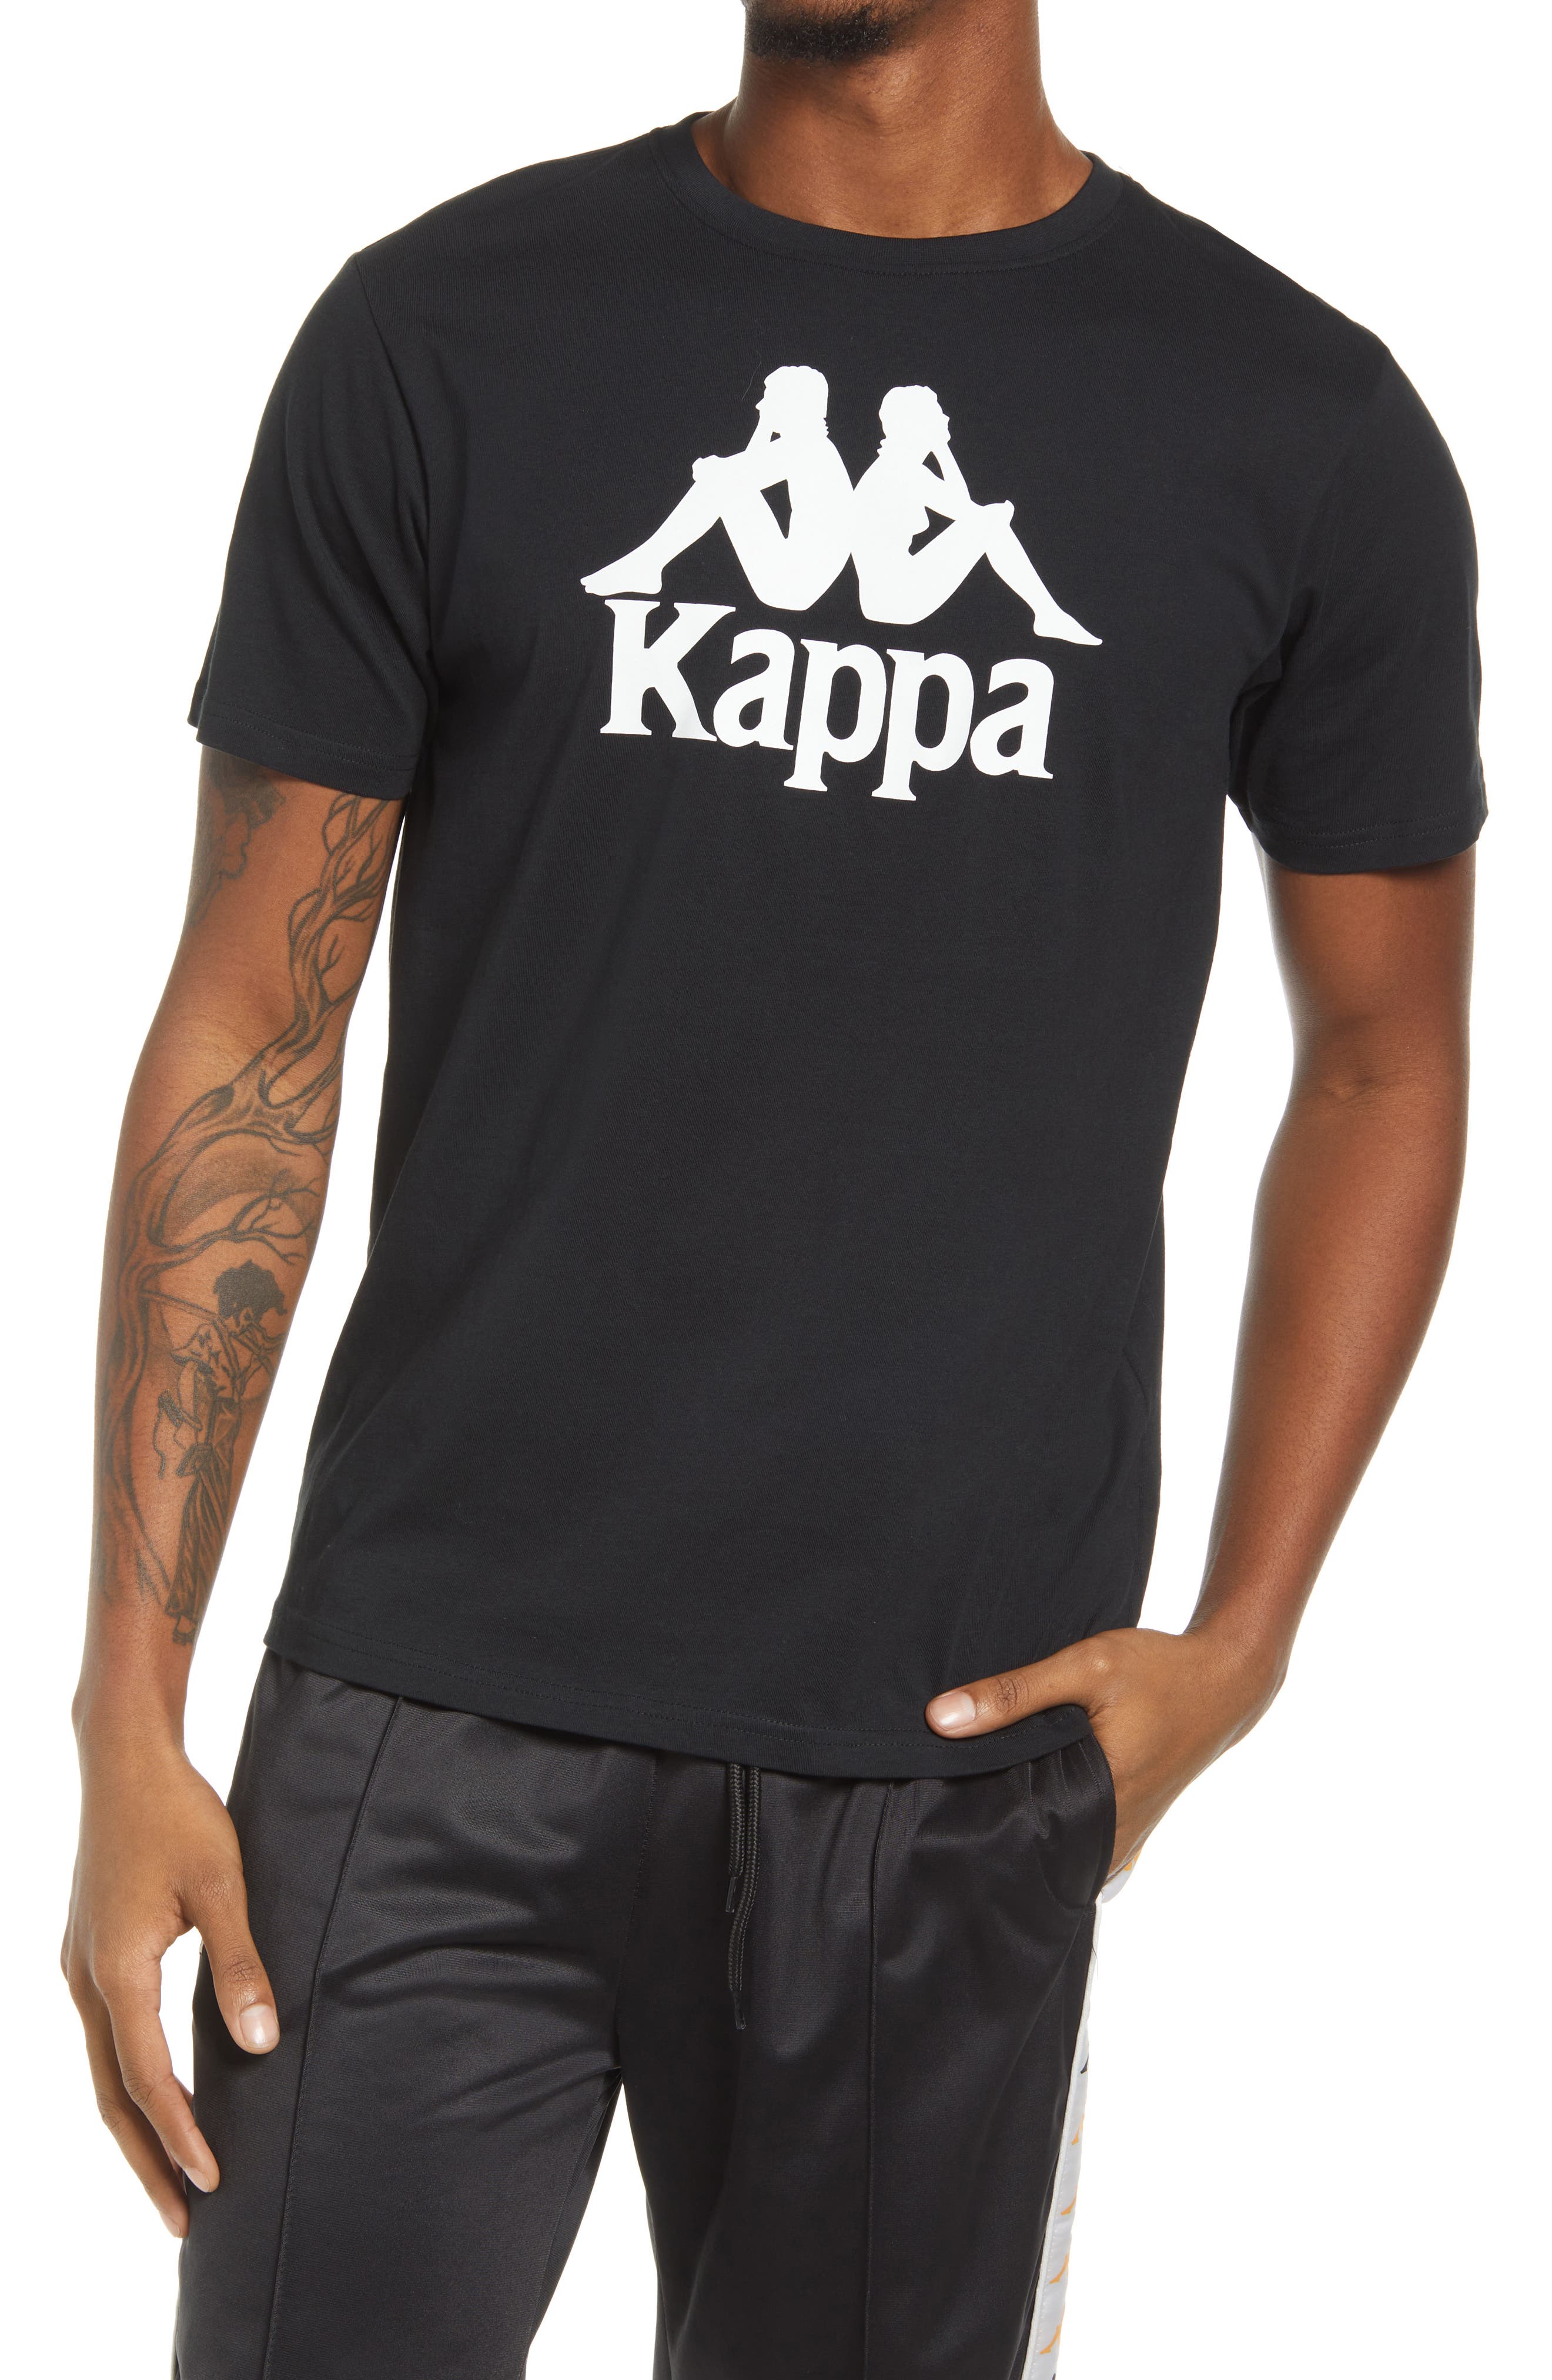 Kappa Men's Authentic Estessi Graphic Tee in Black Smoke-Bright White at Nordstrom, Size Medium